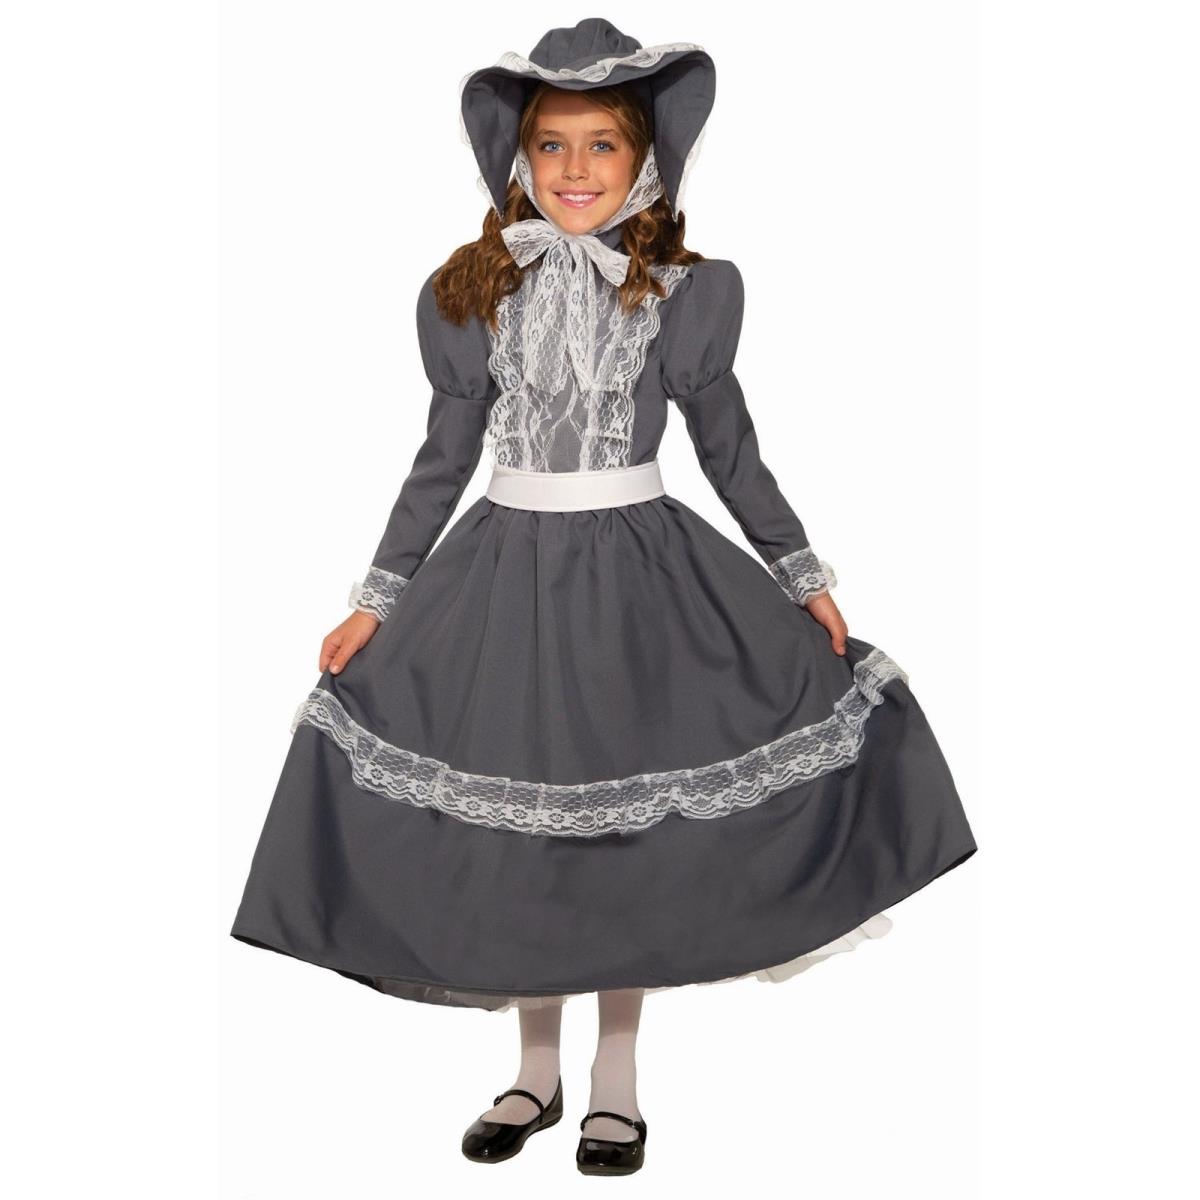 413244 Prairie Child Costume For Girls, Medium 8-10